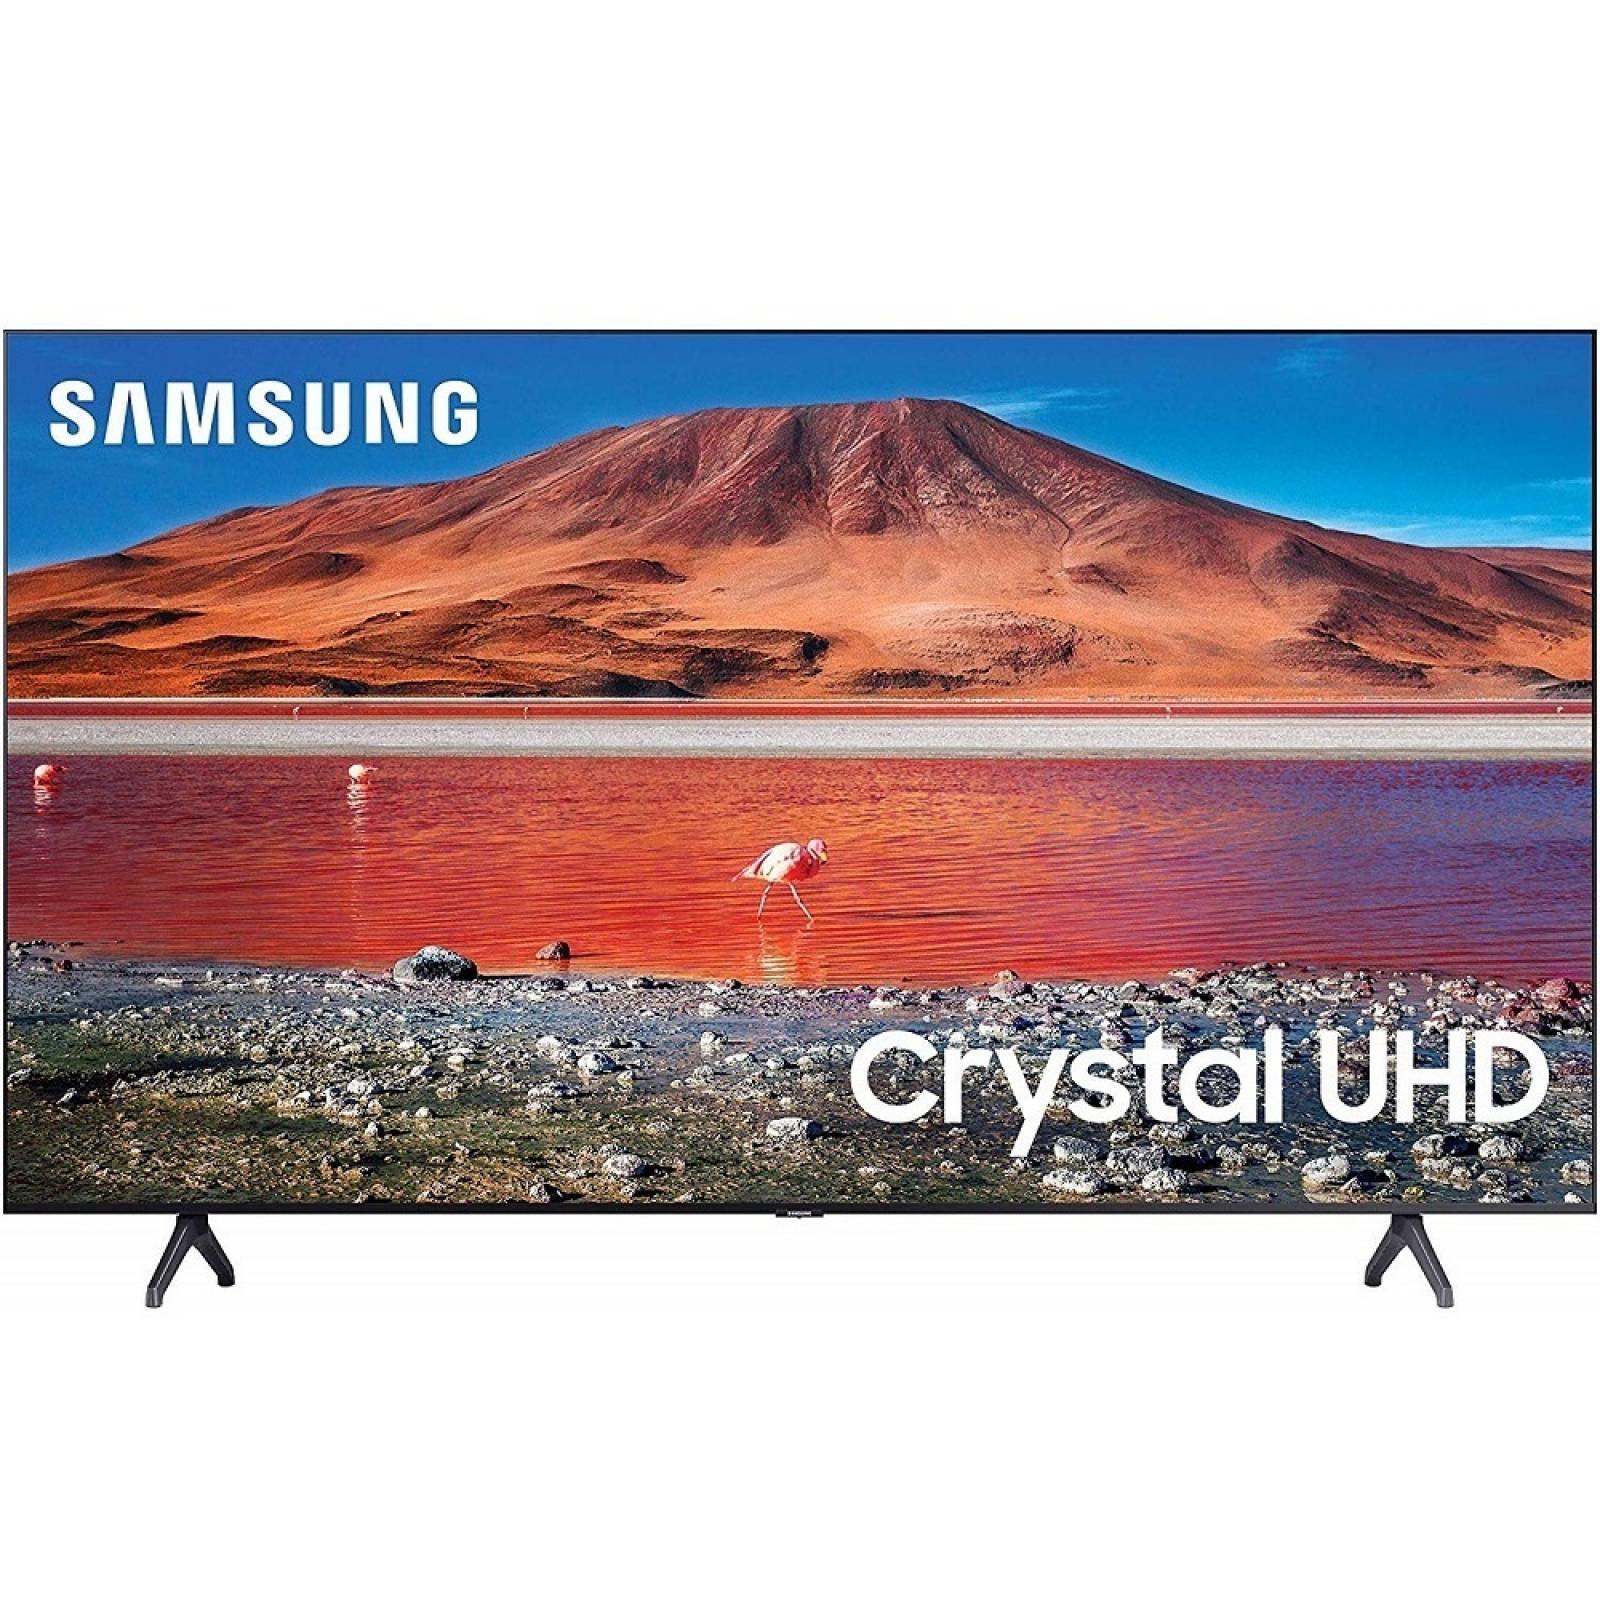 Smart TV Samsung 55 4K HDR10 Engine Crystal UN55TU7000